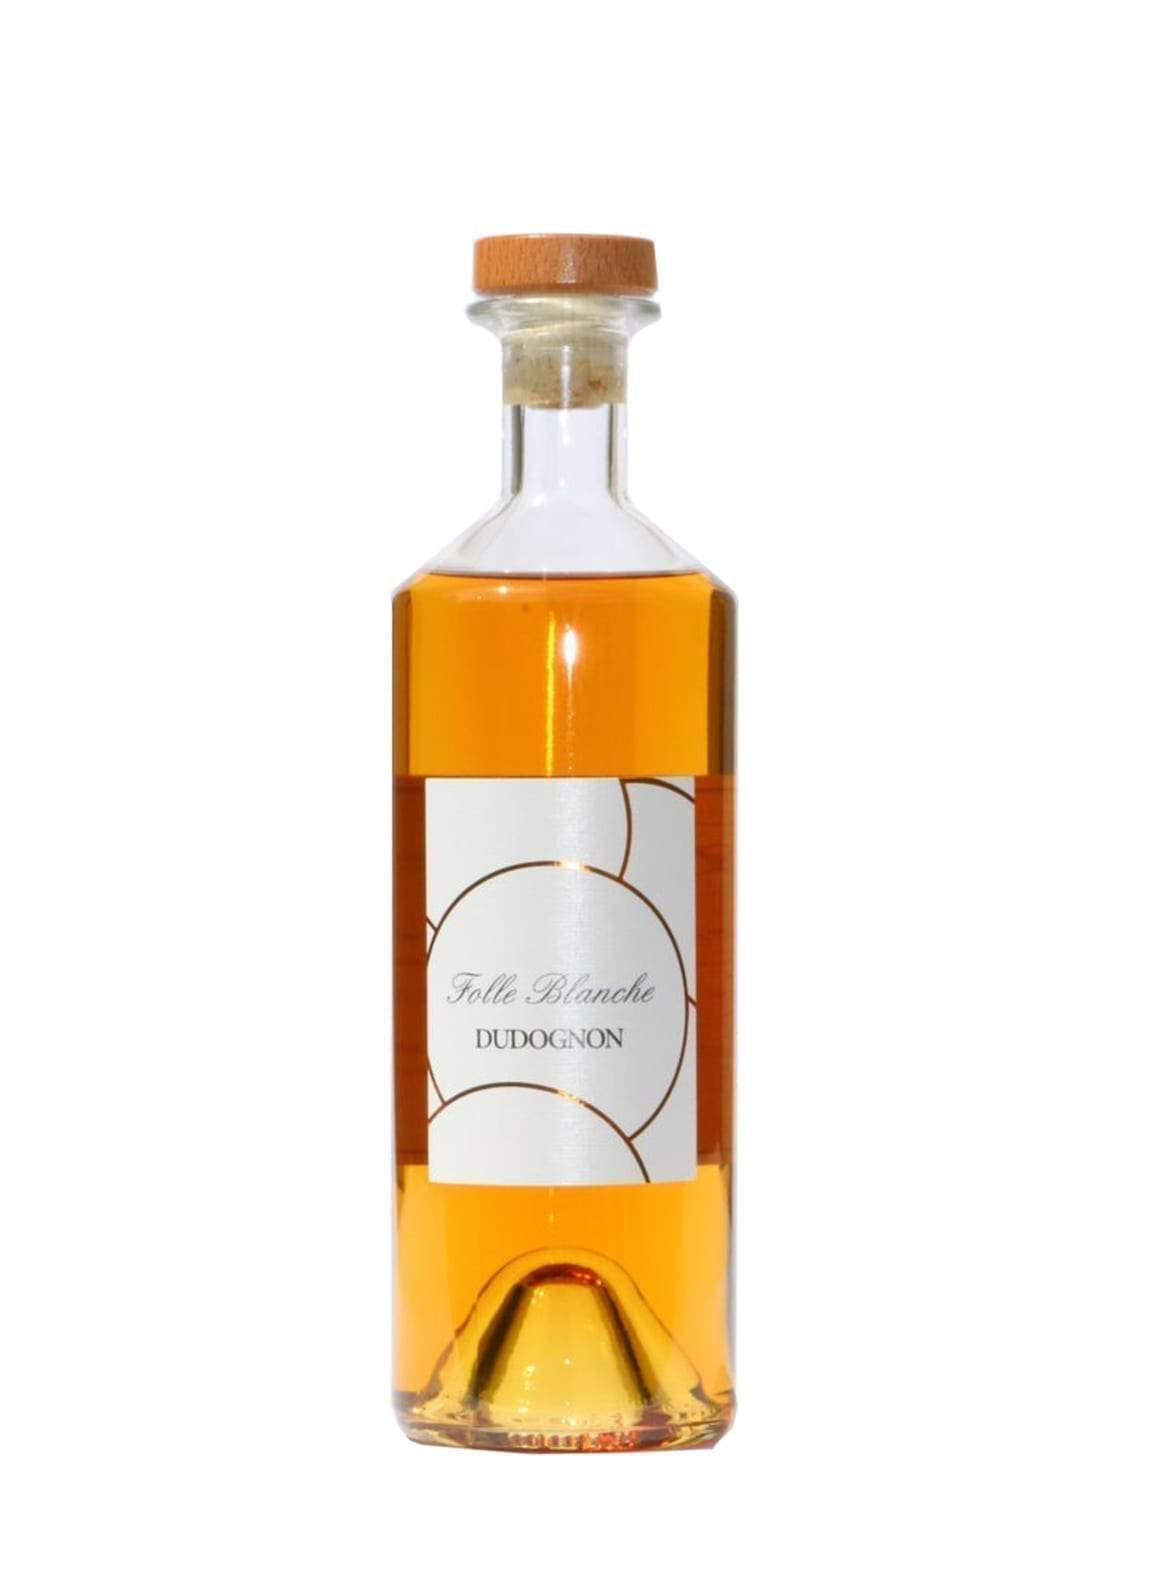 Dudognon Cognac 1er Cru Grande Champagne 100% Folle Blanche 42% 500ml | Brandy | Shop online at Spirits of France